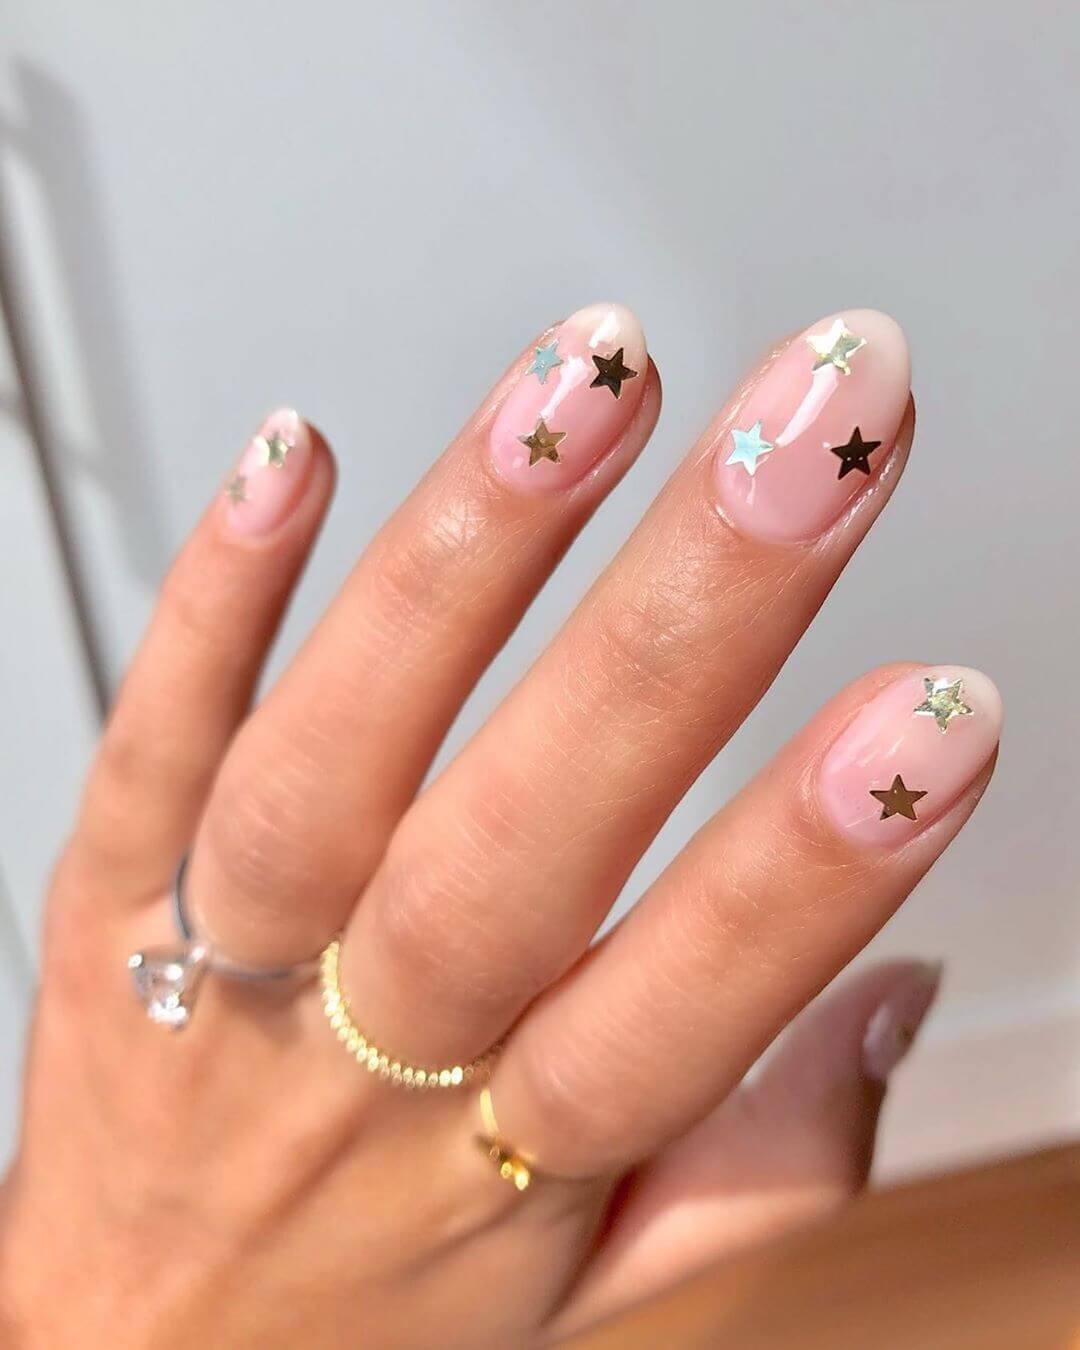 Starry Engagement Nail Art Designs